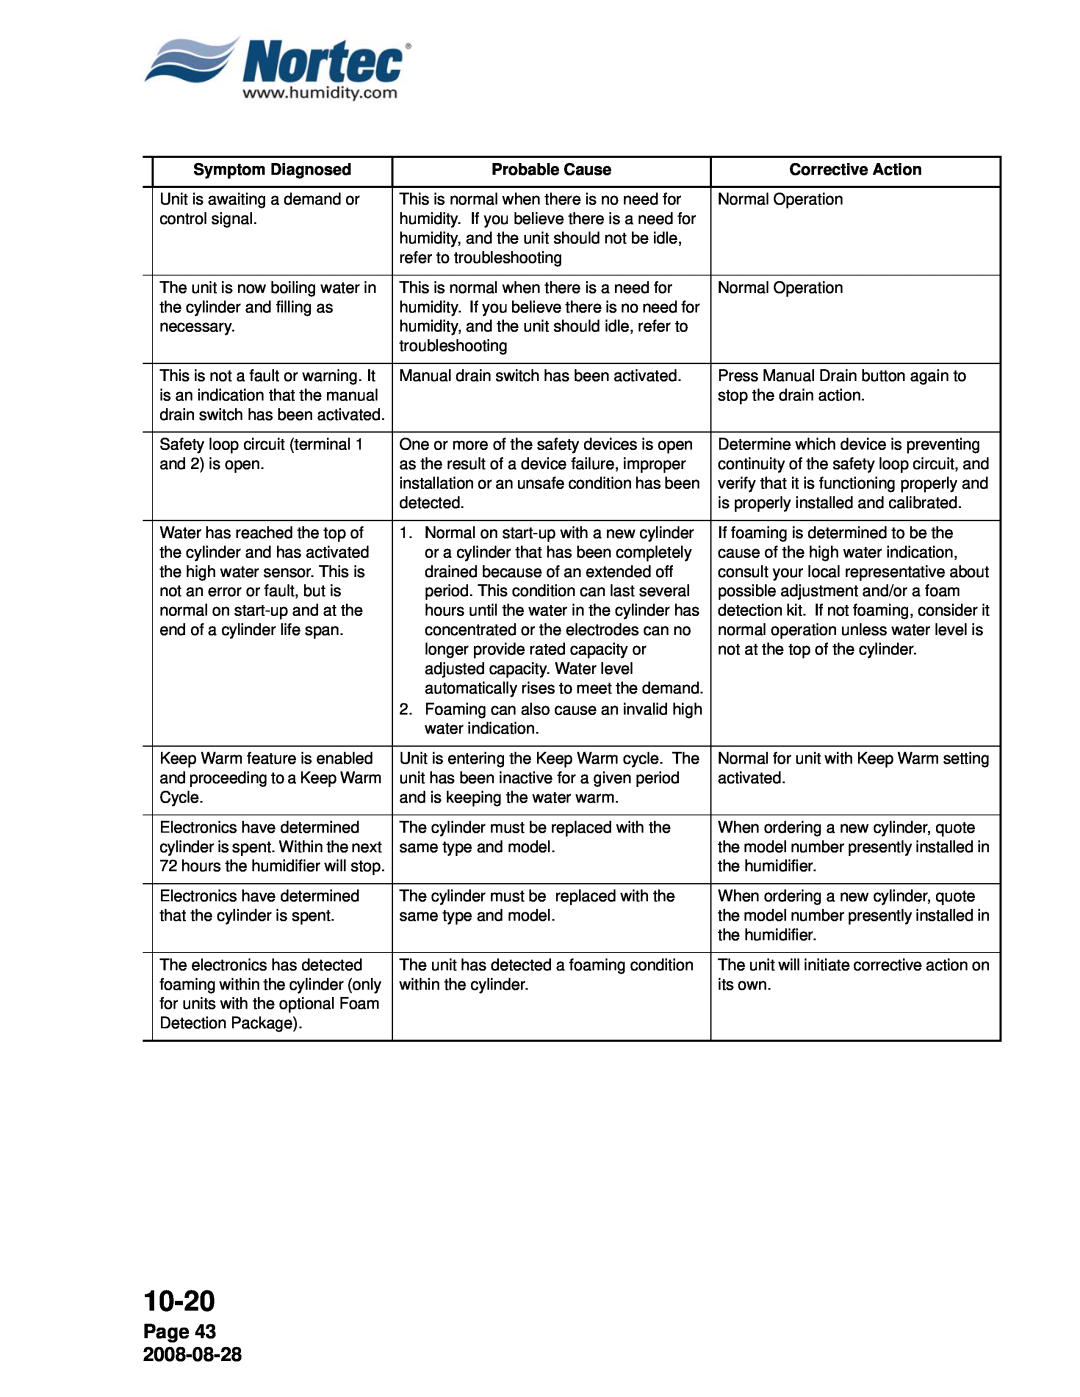 Nortec NH Series installation manual Page 43, 10-20, Symptom Diagnosed, Probable Cause, Corrective Action 